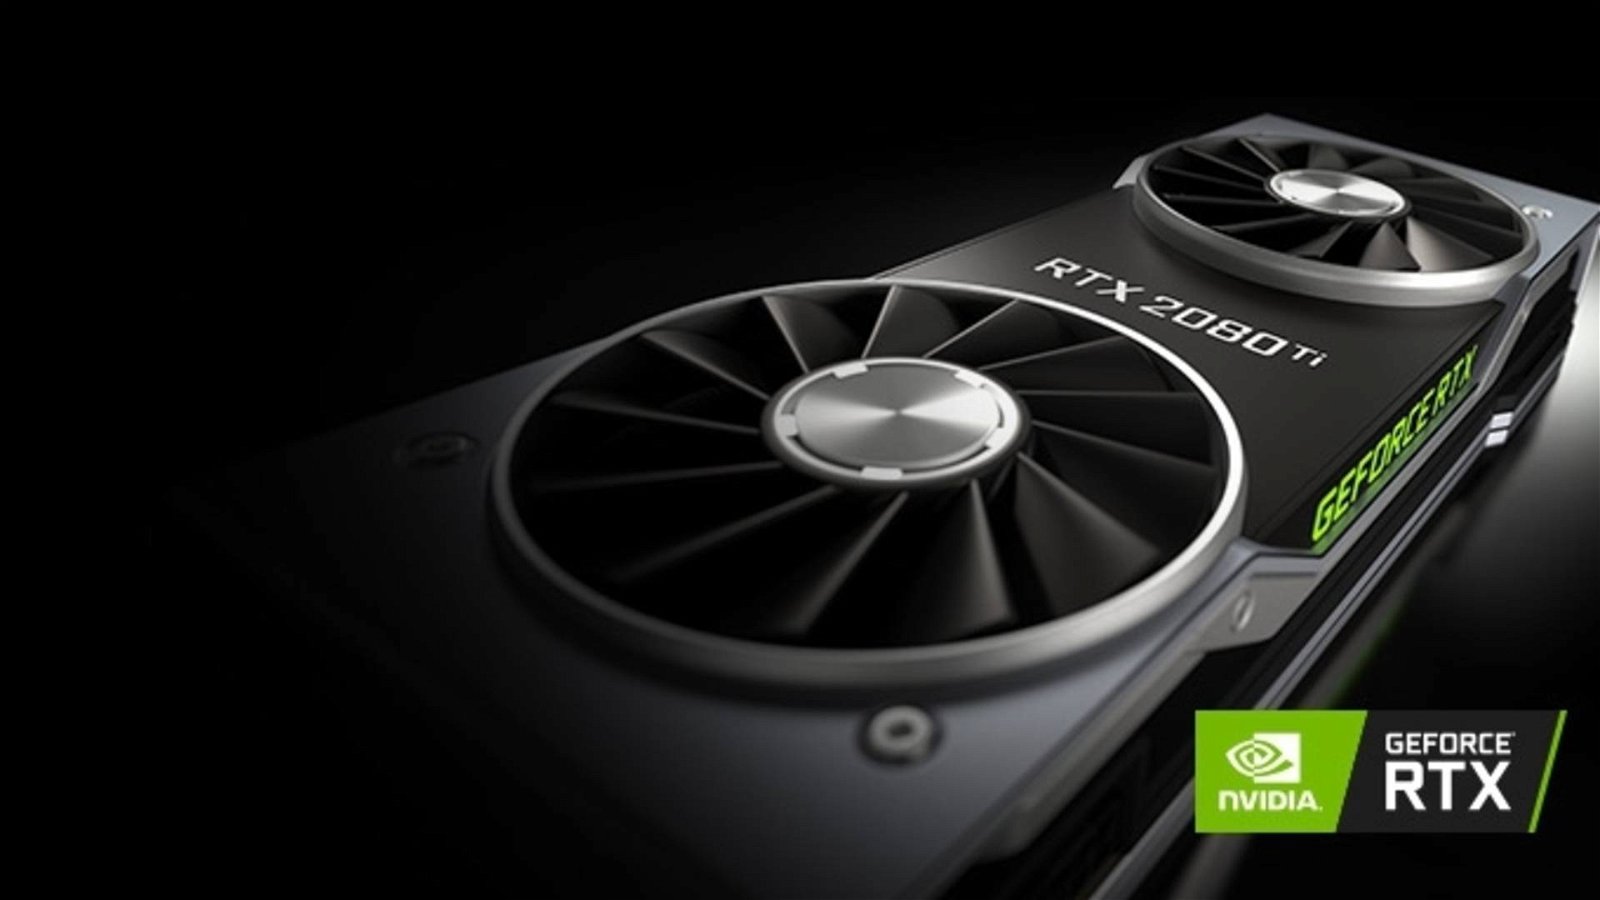 Immagine di Nvidia GeForce RTX 2080 Ti può raggiungere i 22GB di VRAM GDDR6